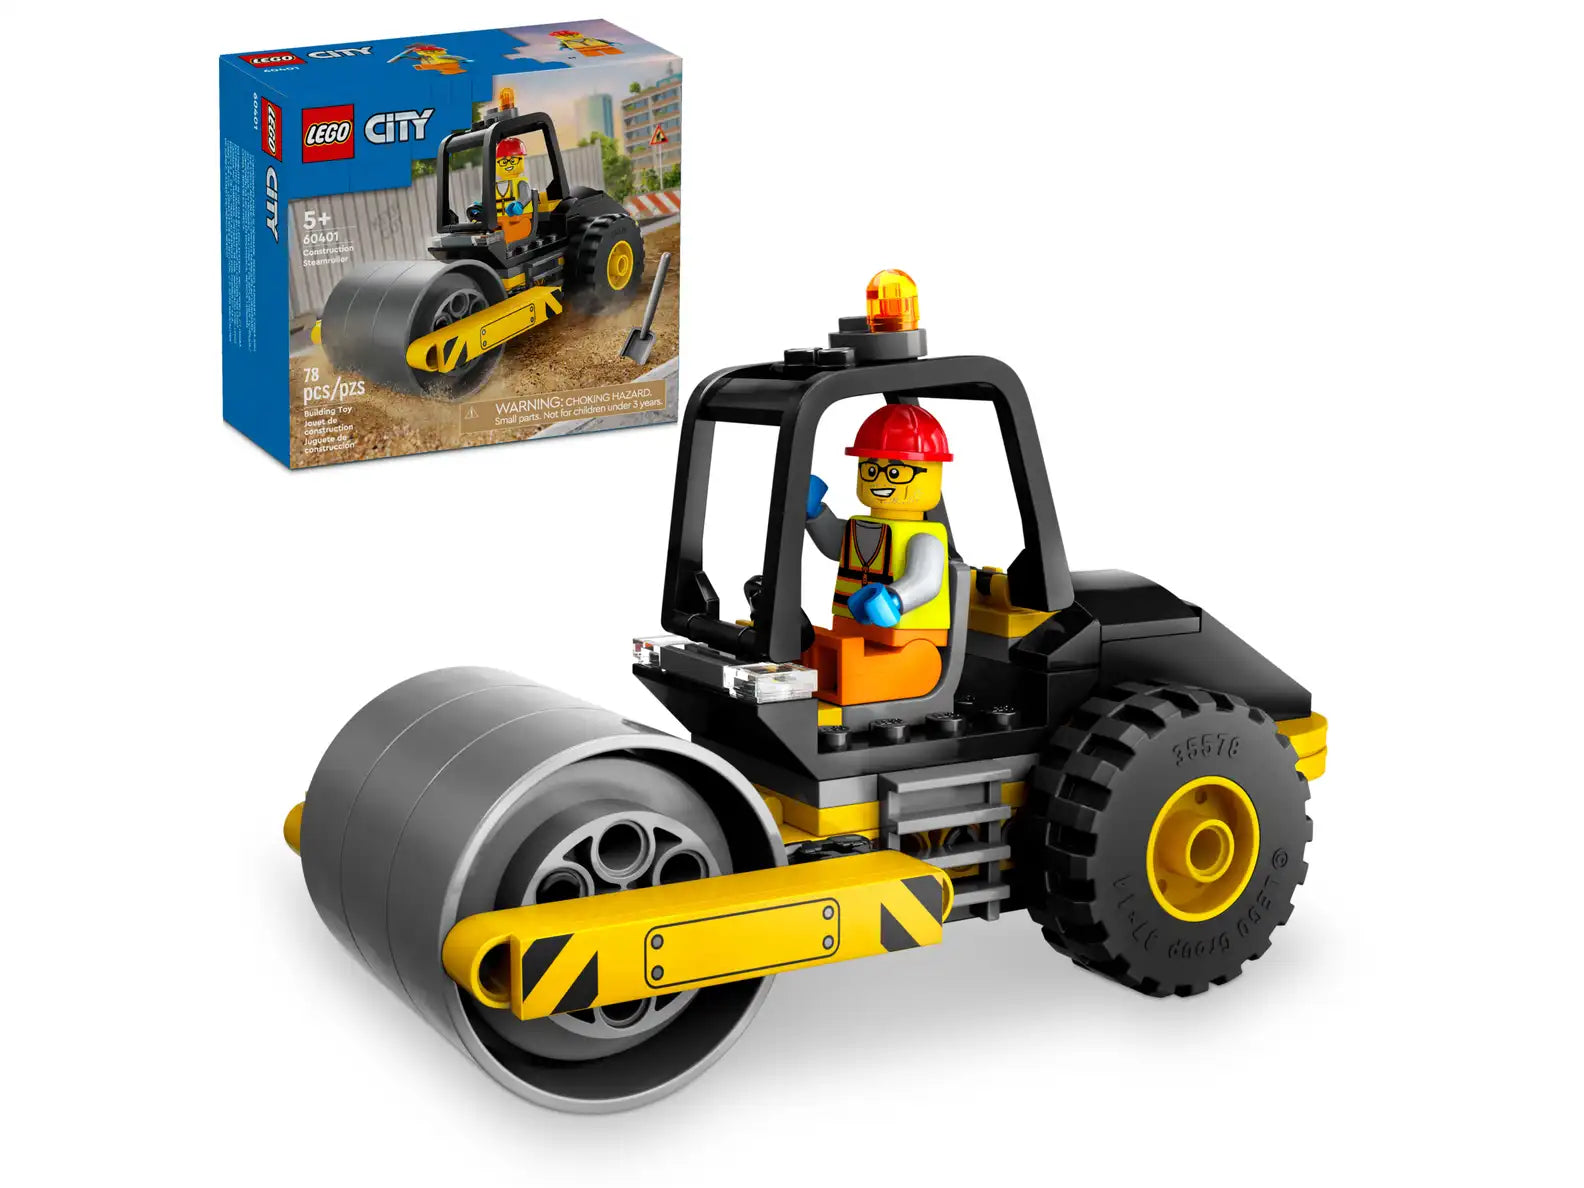 Lego City 60401 - Construction Steamroller